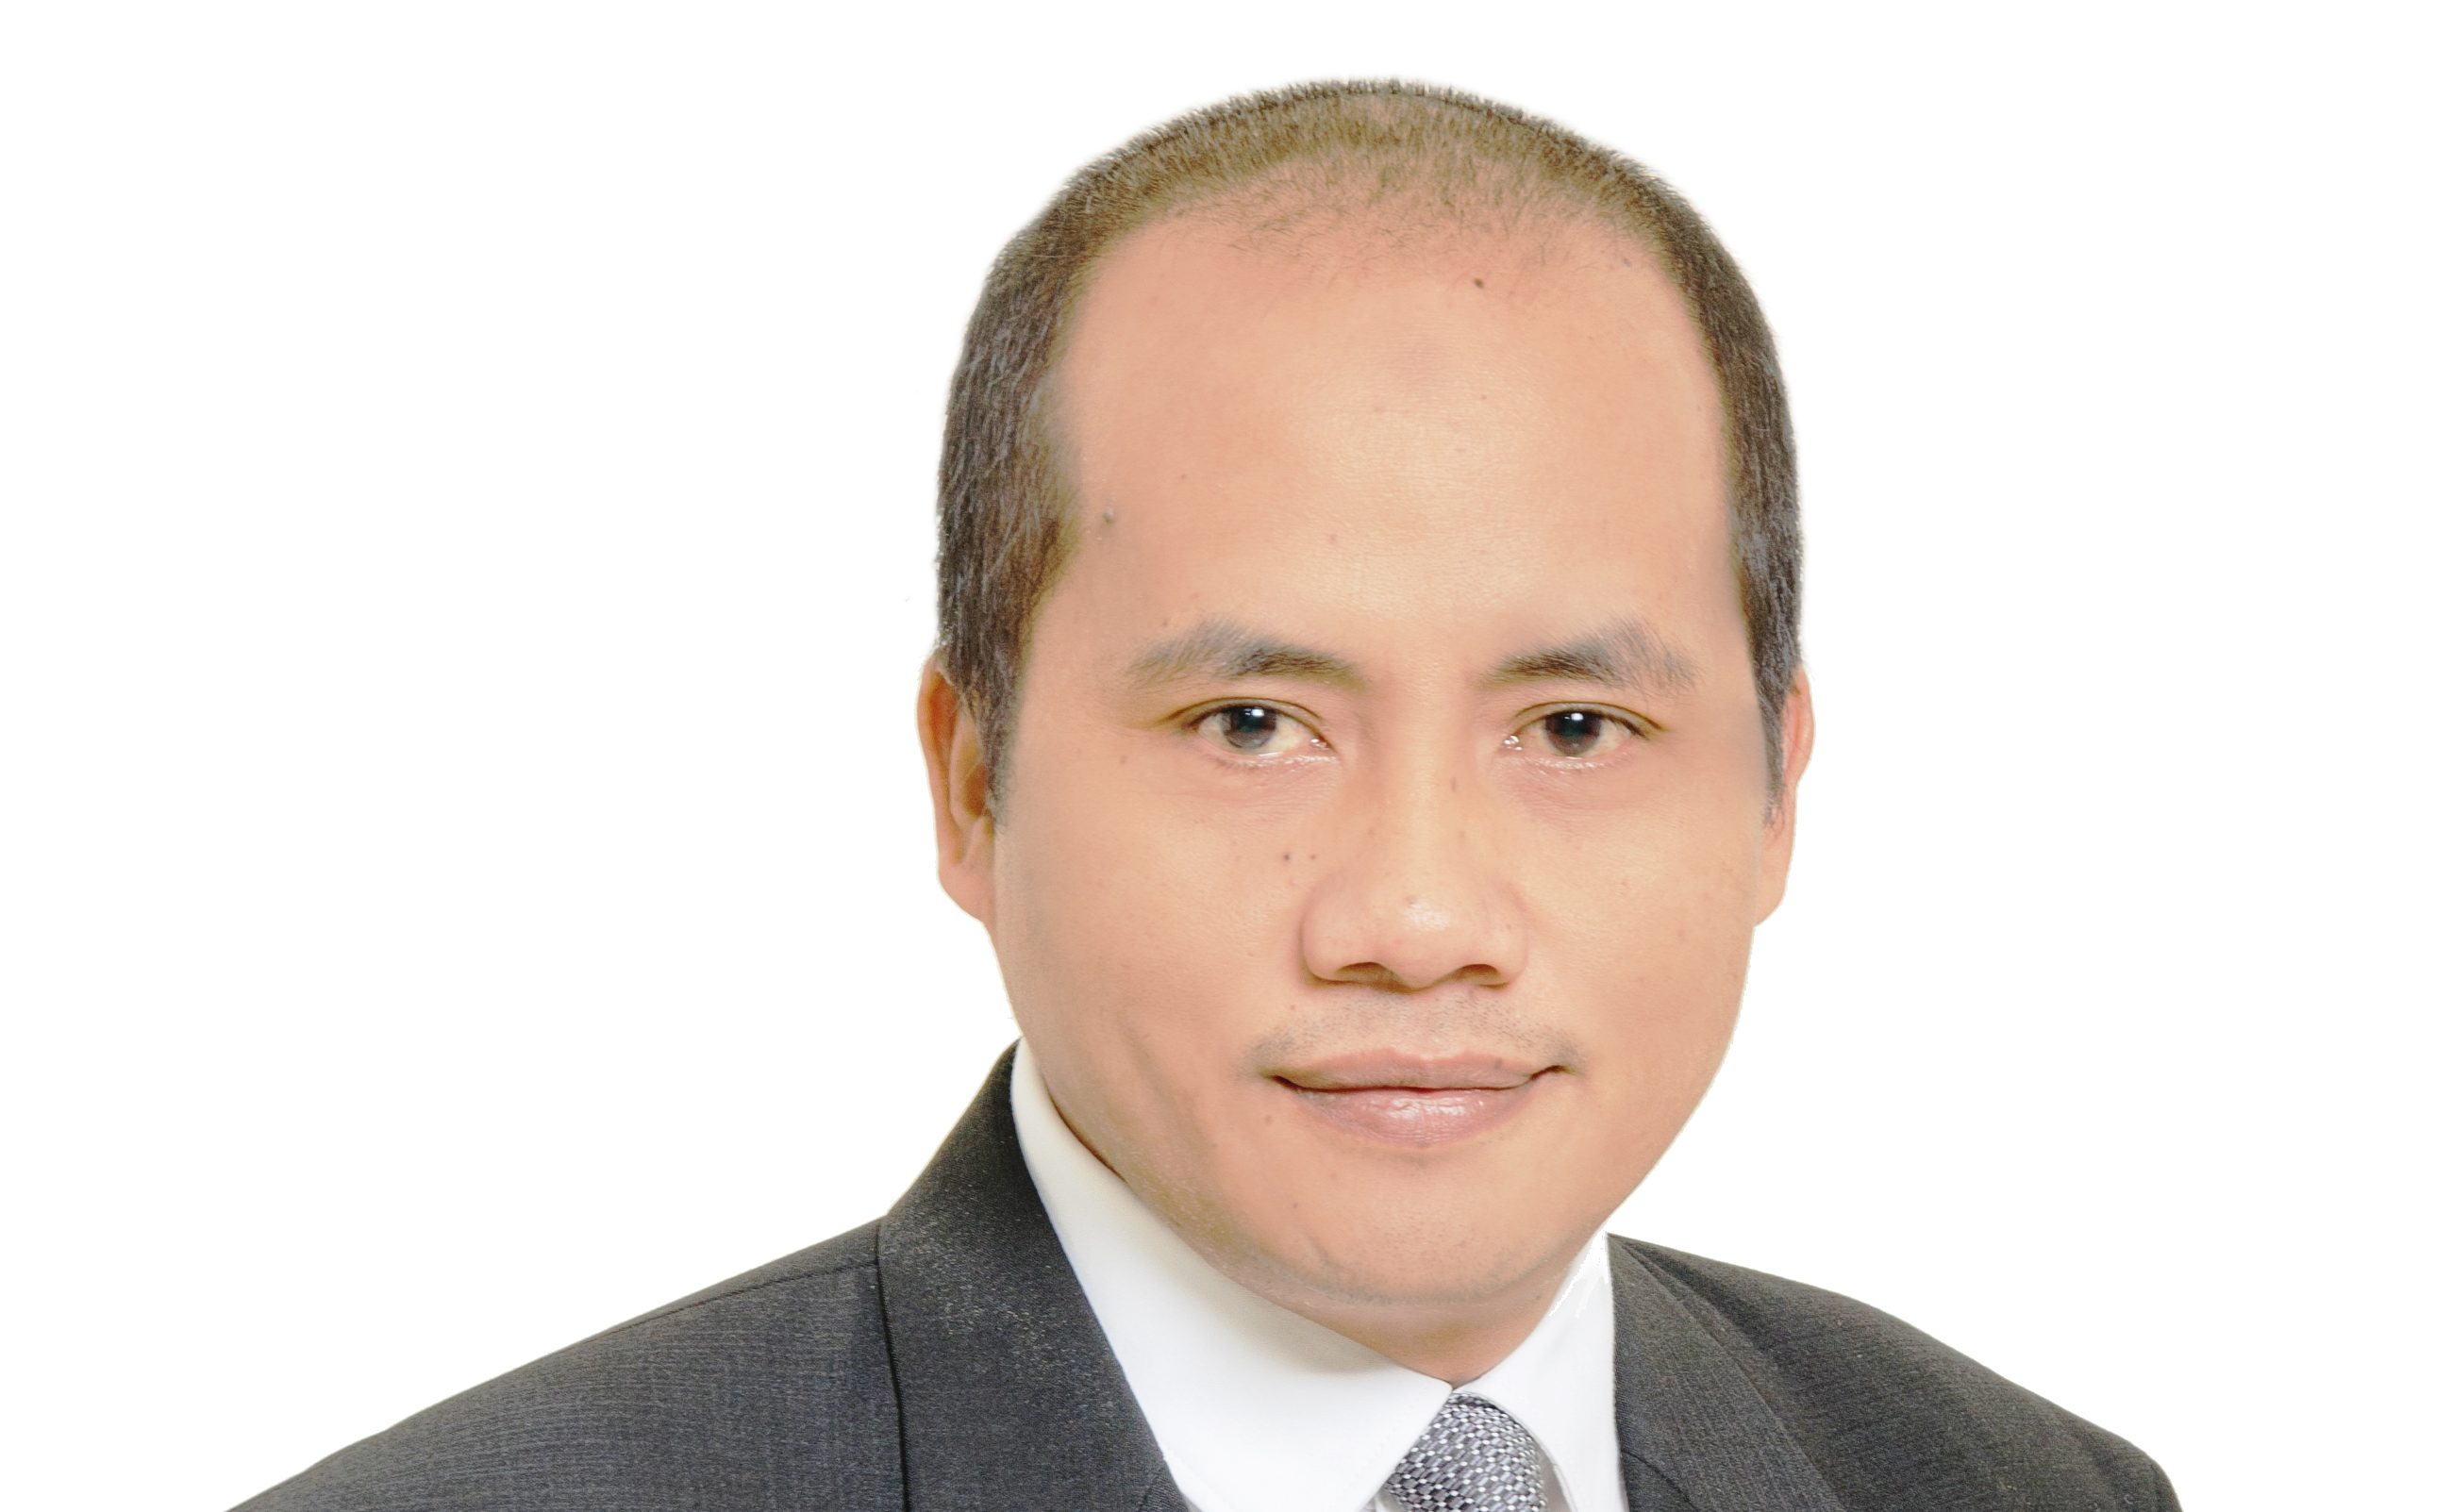 Mengenal Muhammad Noor Cholis, General Manager Noormans Hotel Semarang/istimewa